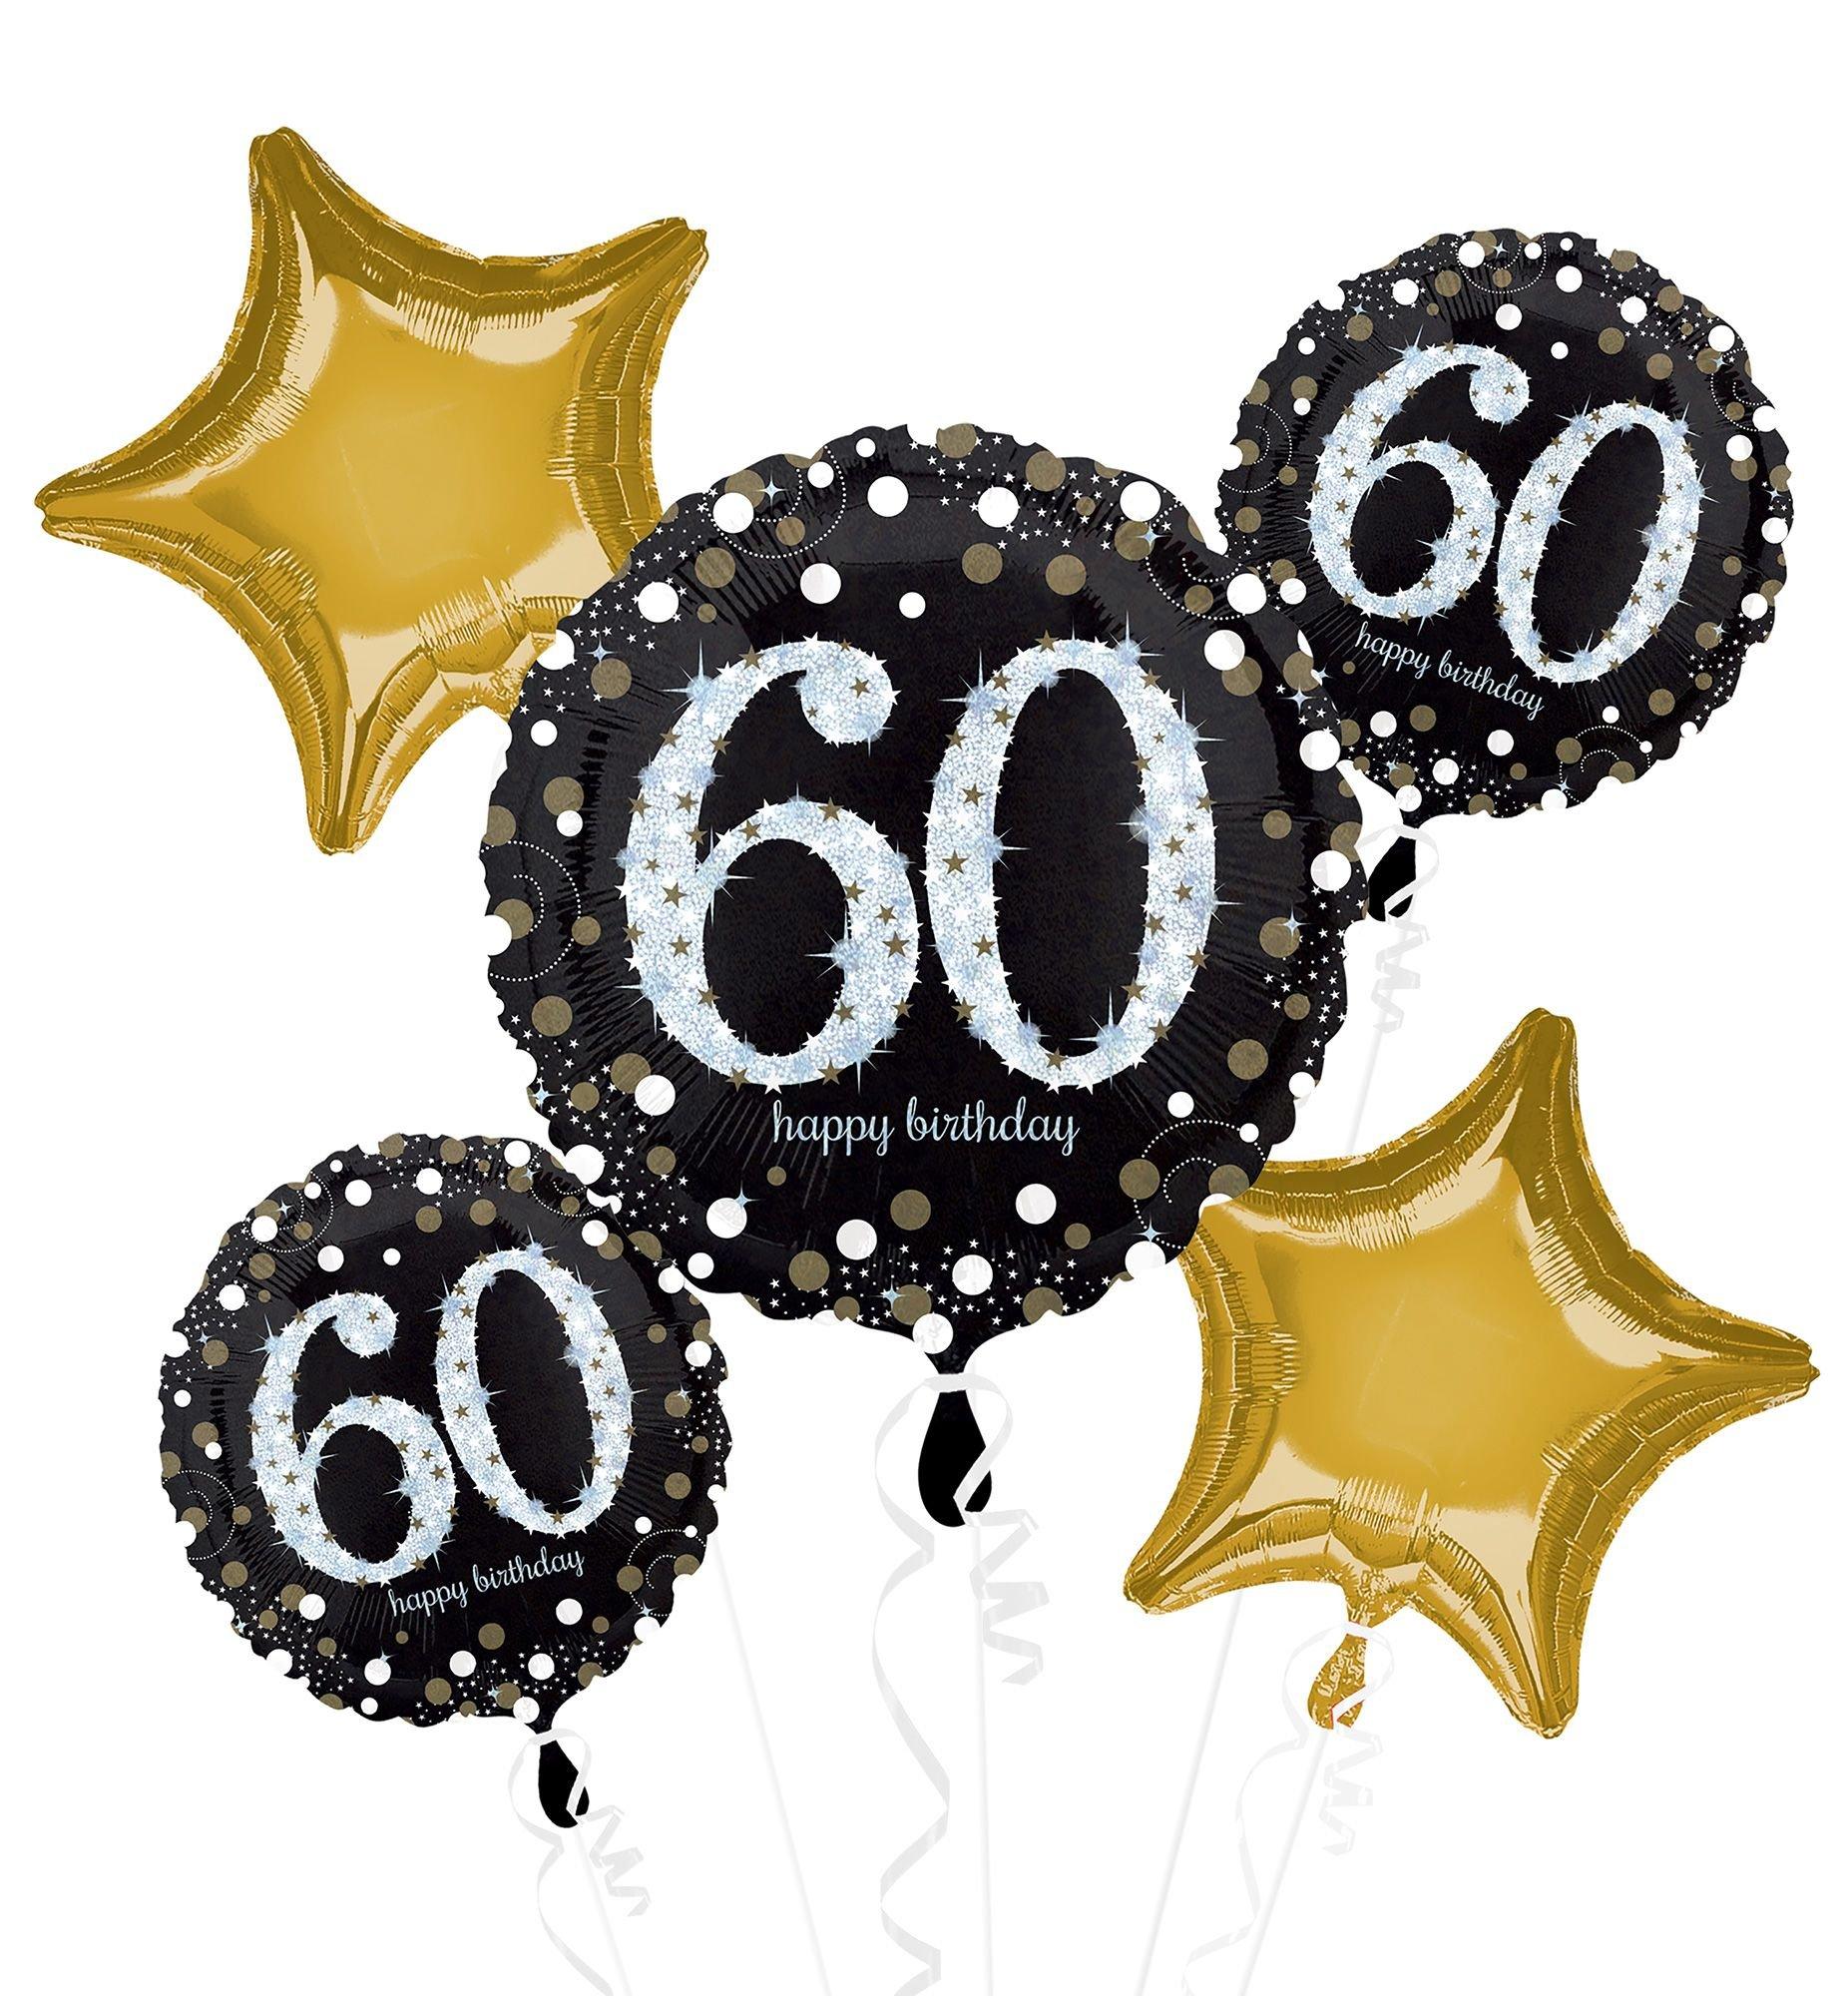 60 aniversario  Balloon decorations, Birthday balloon decorations, Balloon  bouquet delivery